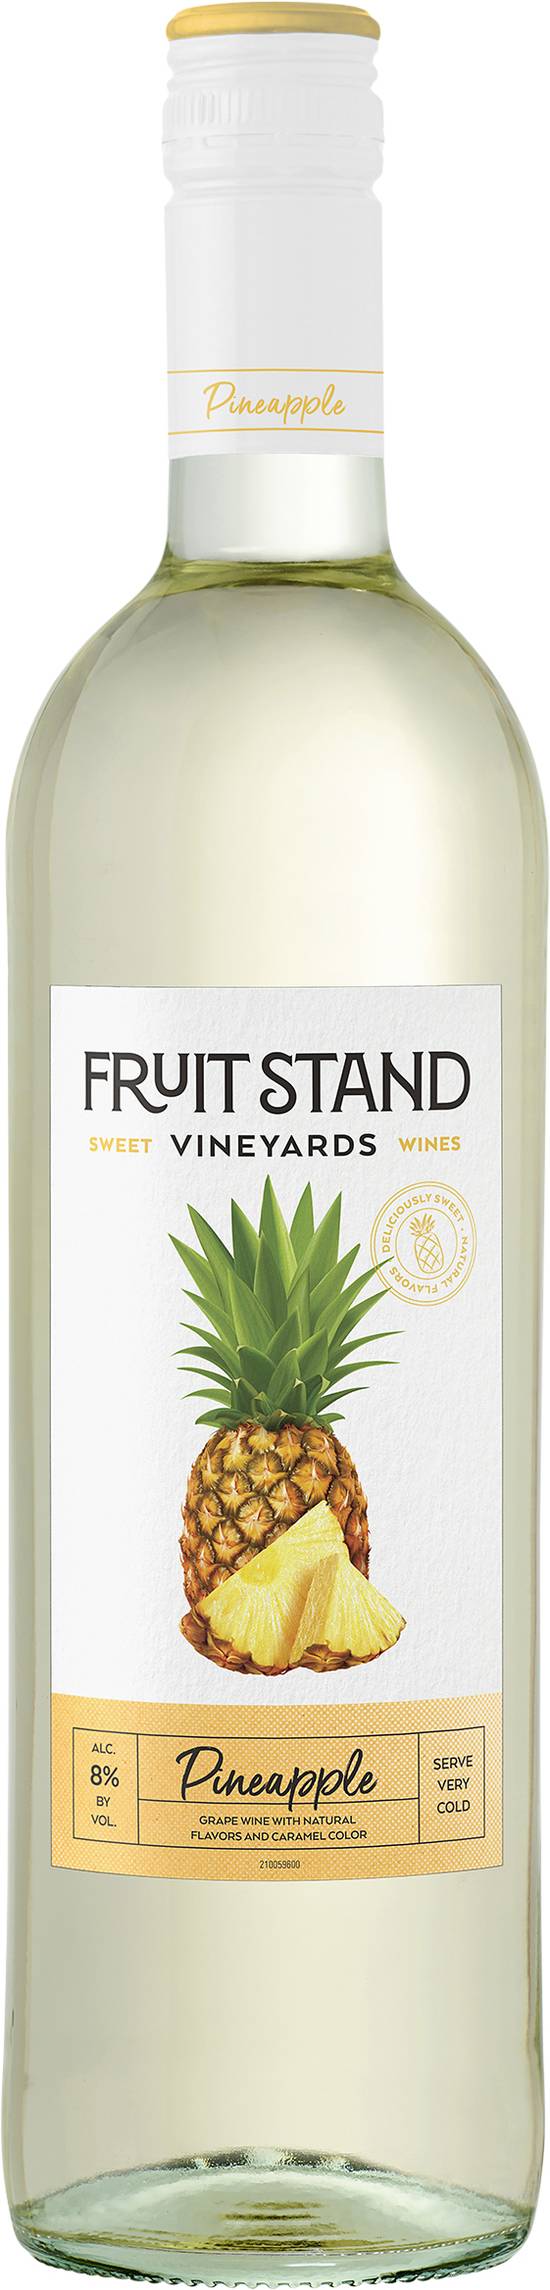 Fruit Stand Vineyards Pineapple Wine (25.3605 fl oz)